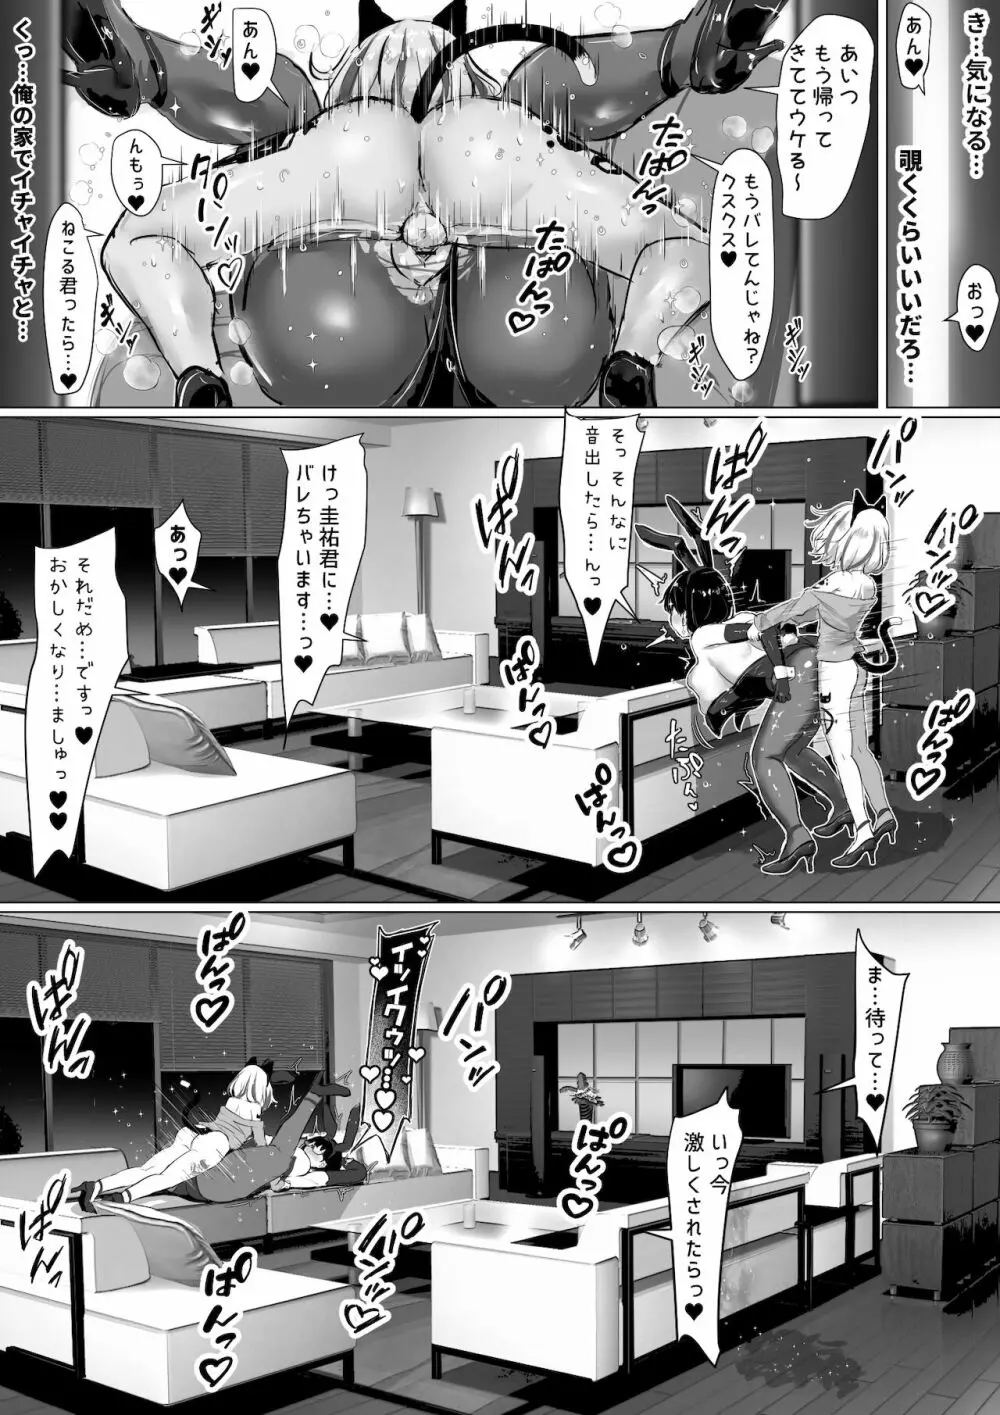 [Fuzume] オタクな妻(絵師)がヤリチン配信者に寝取られる話 オフパコ 6-9 5ページ